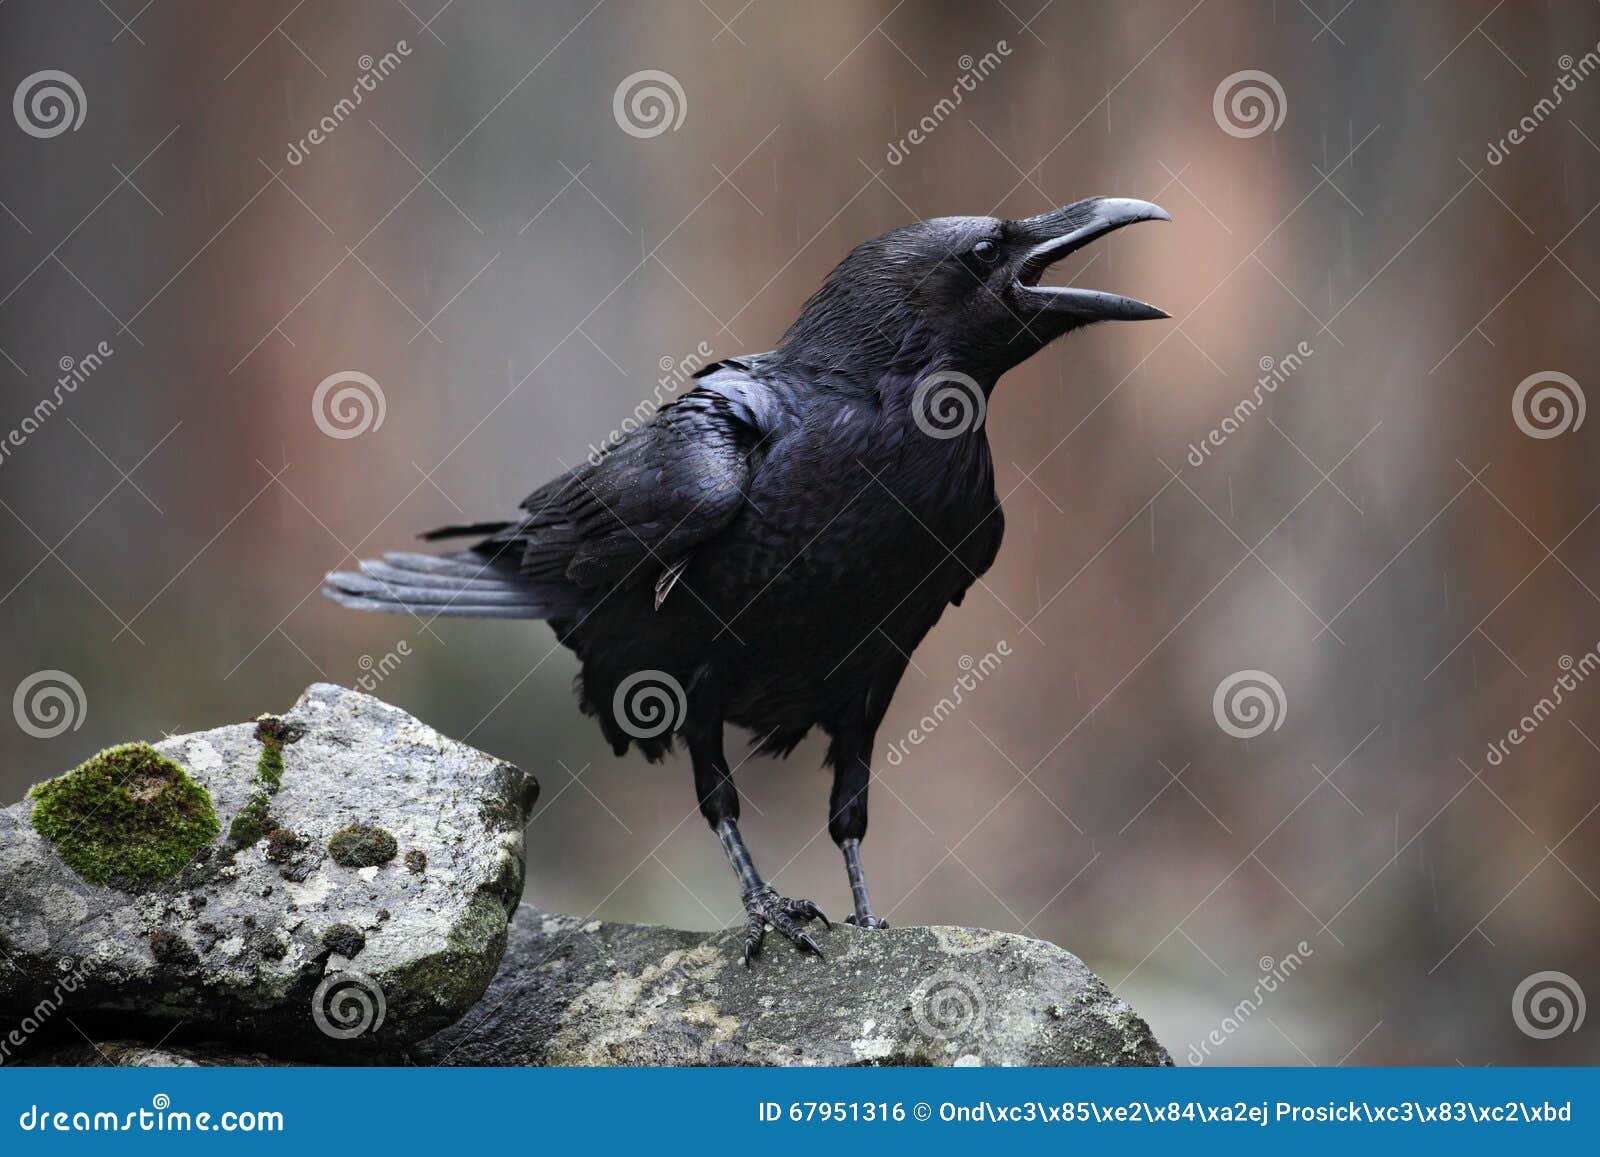 black bird raven with open beak sitting on the stone